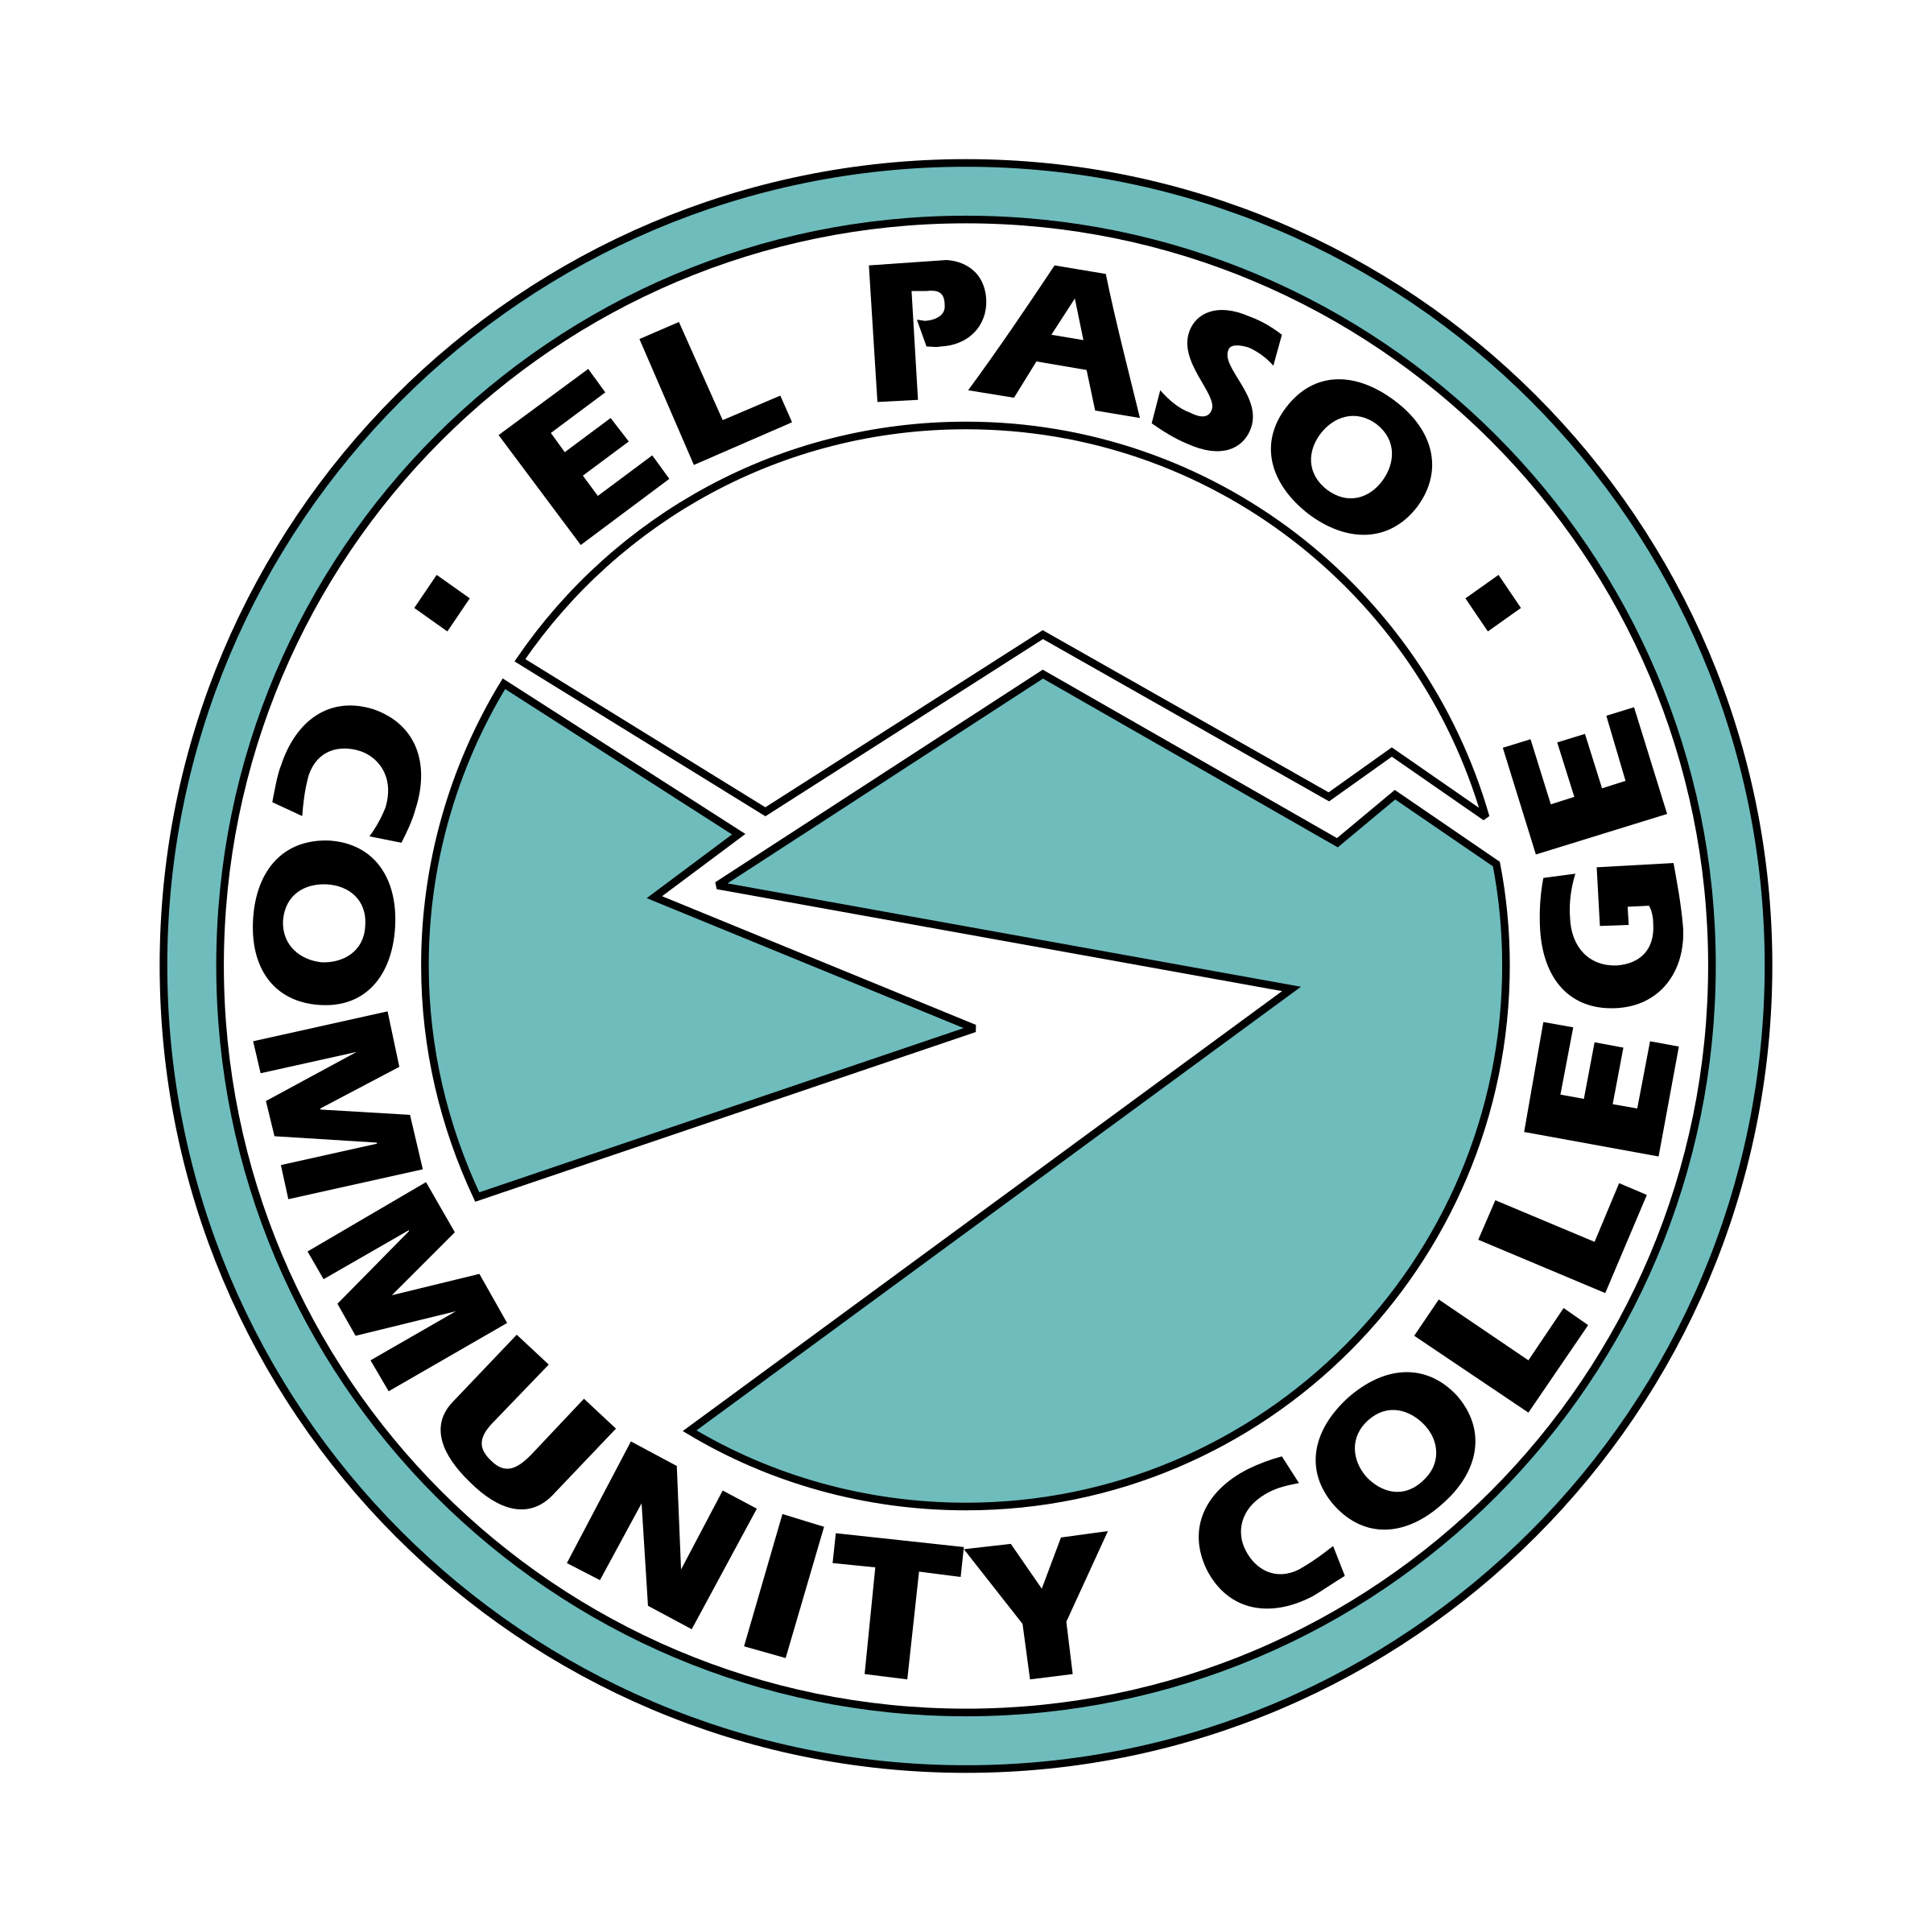 EPCC Logo - El Paso Community College Logo PNG Transparent & SVG Vector